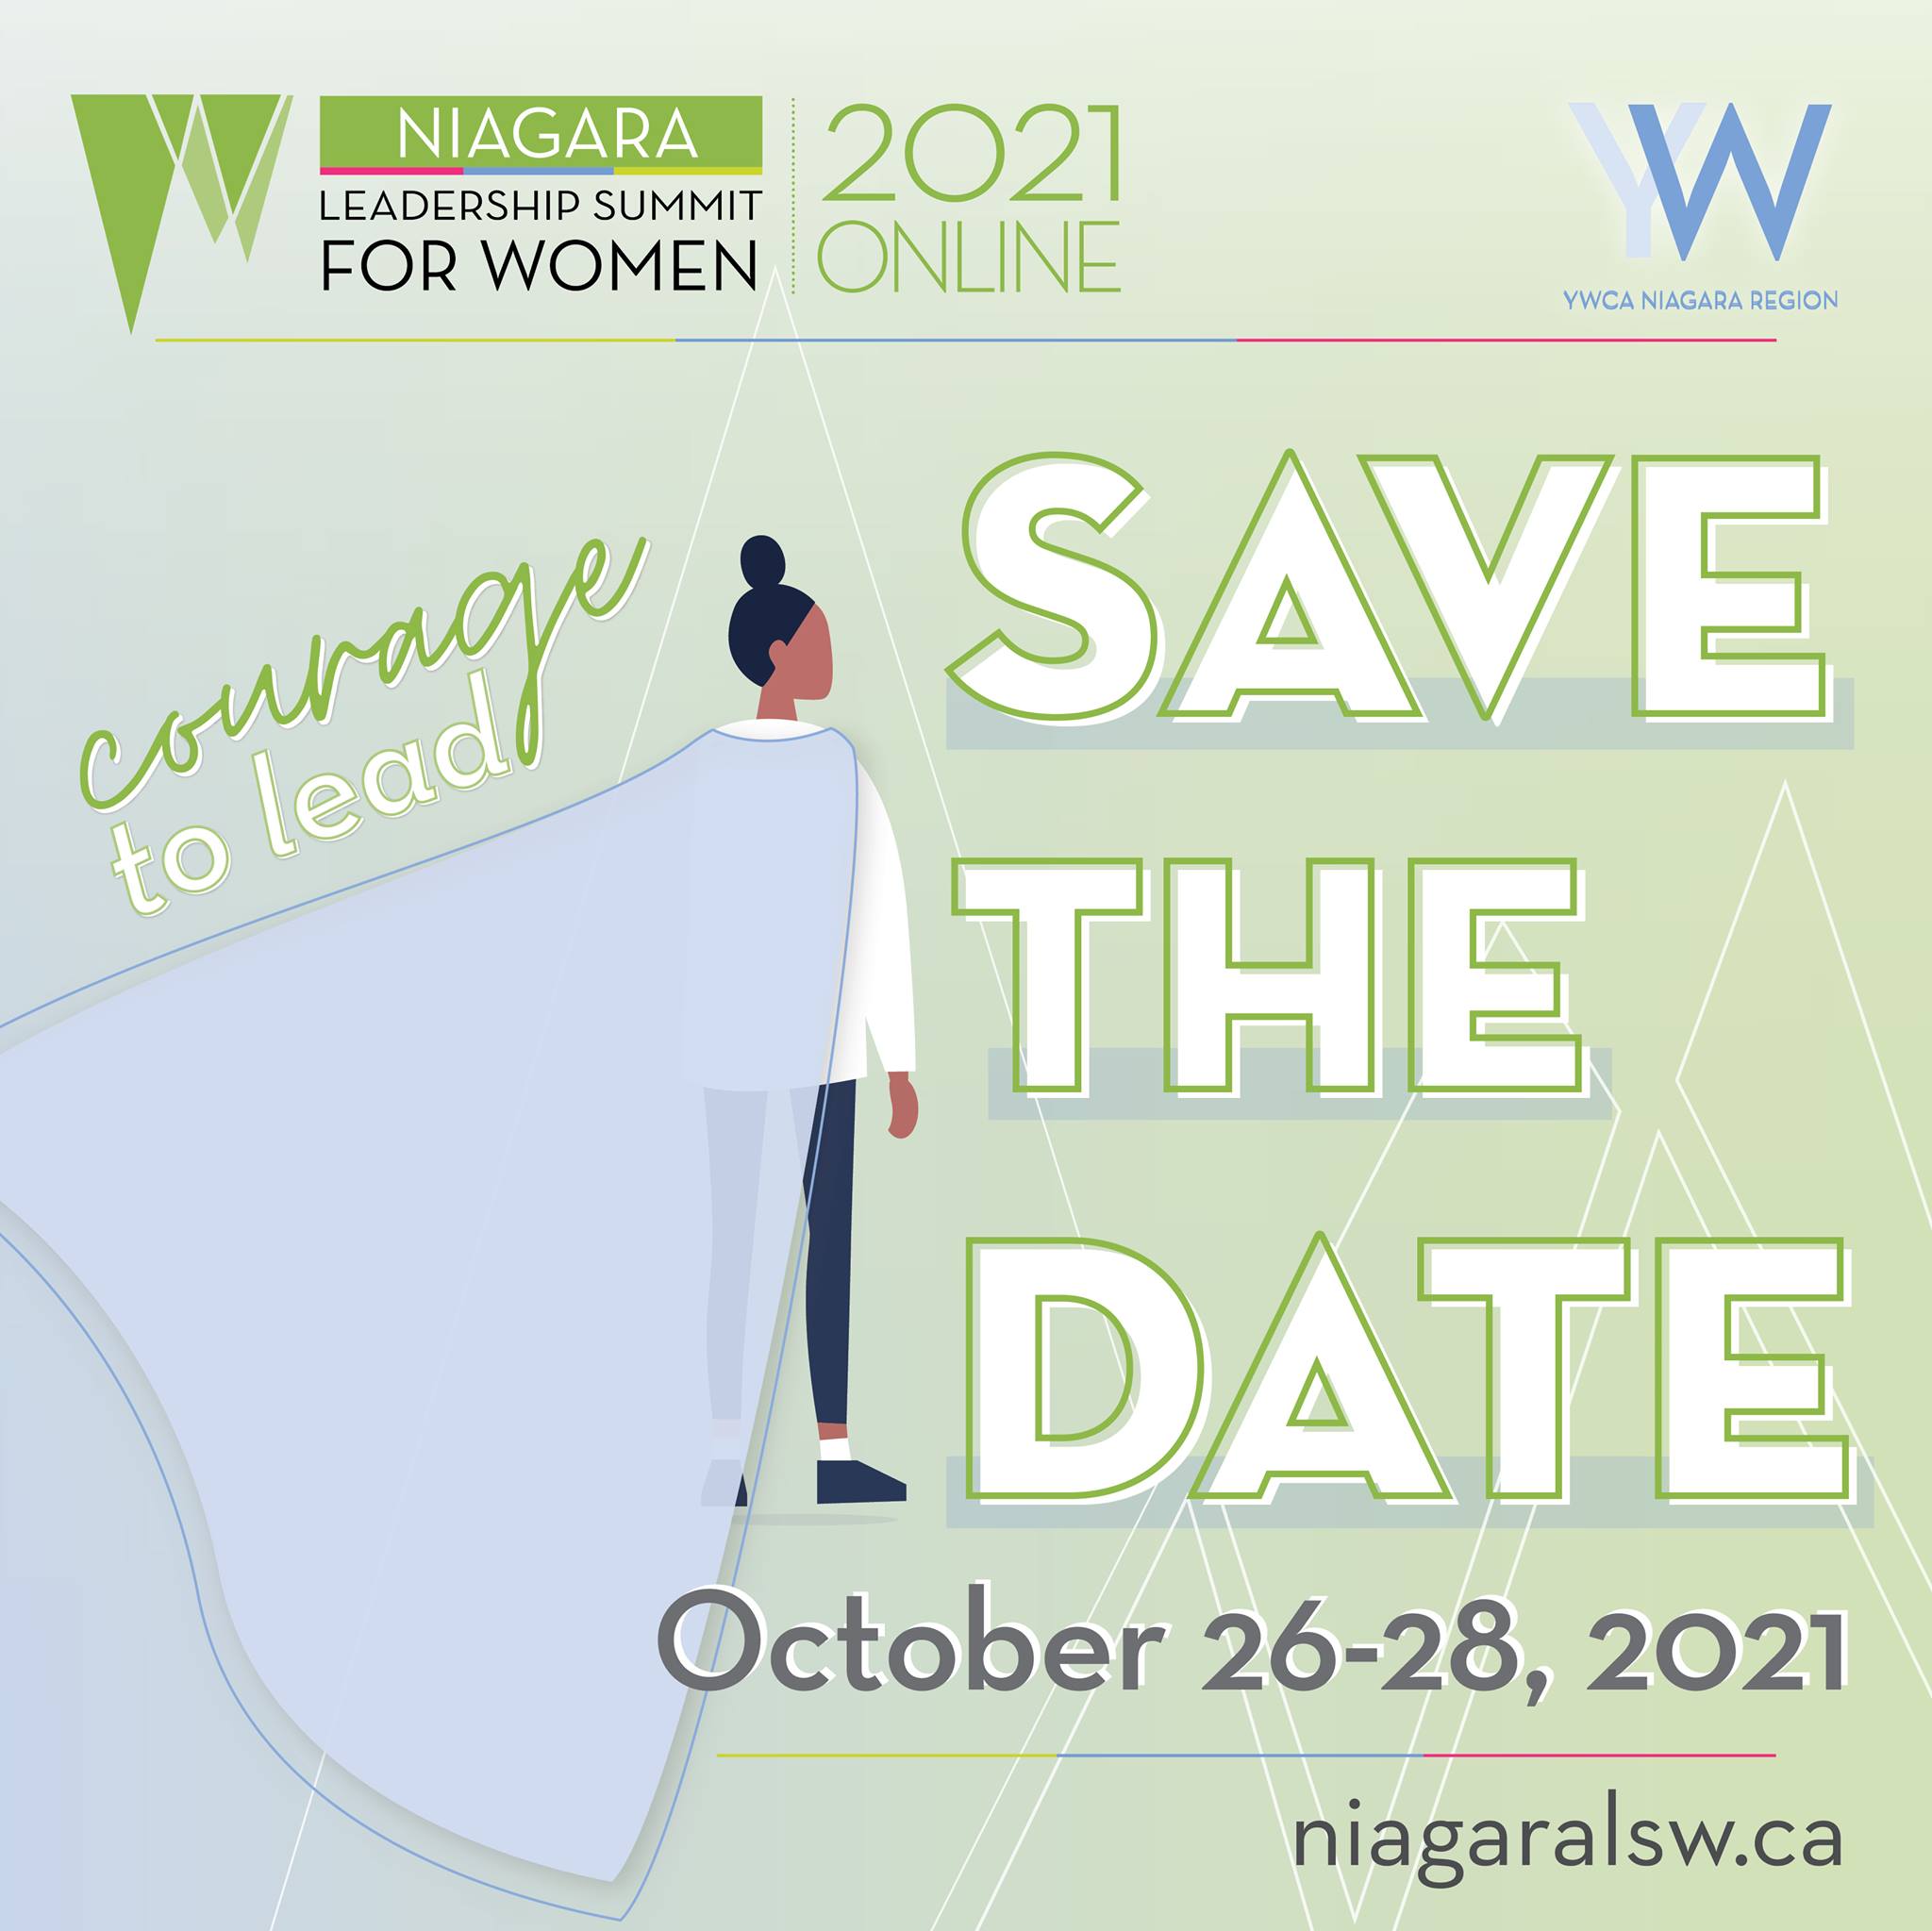 Niagara Leadership Summit for Women